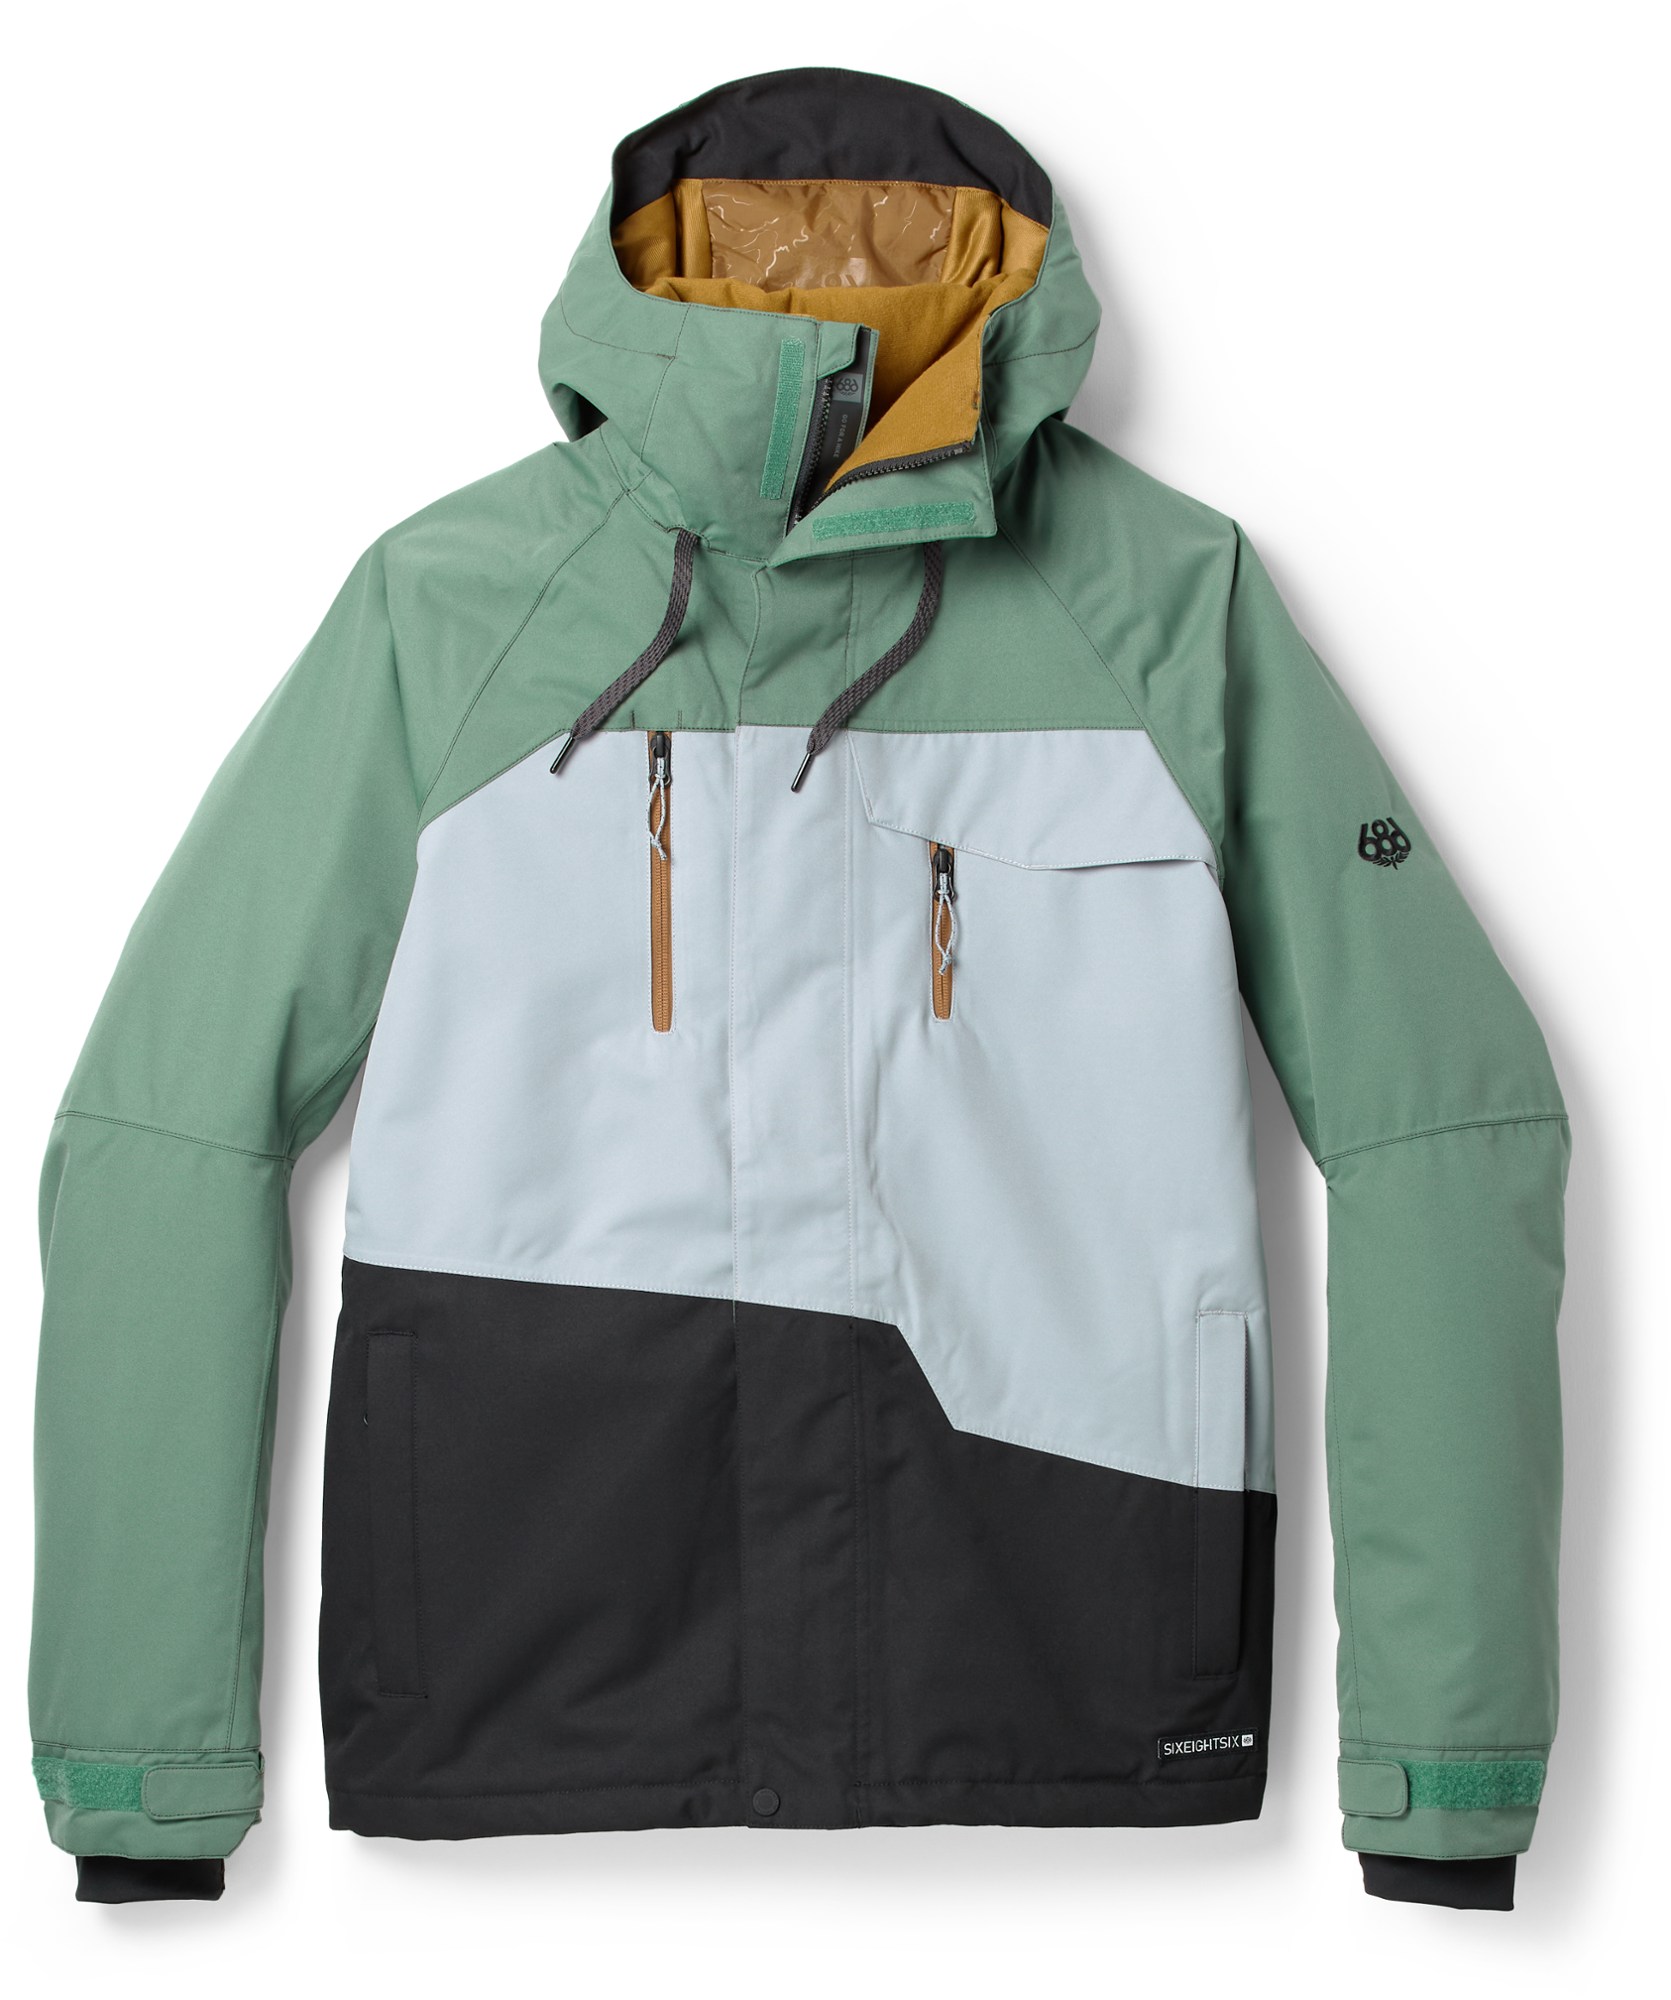 Утепленная куртка Geo - Мужская 686, зеленый утепленная куртка 686 geo insulated зеленый